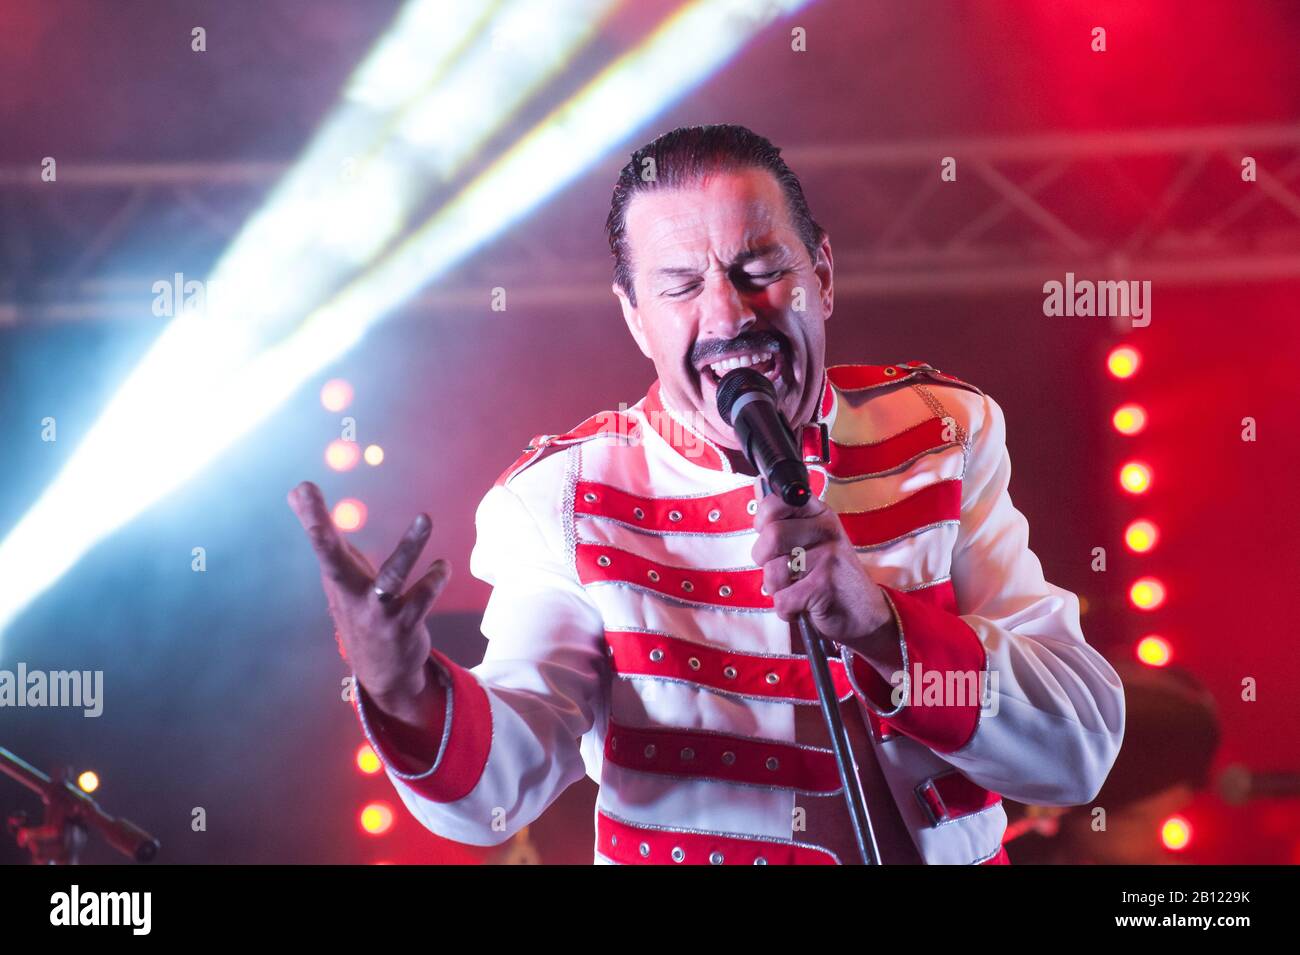 Professional Freddie Mercury tribute artist Steve Littlewood performing at the GOTG Festival in Yateley, UK - June 2012 Stock Photo